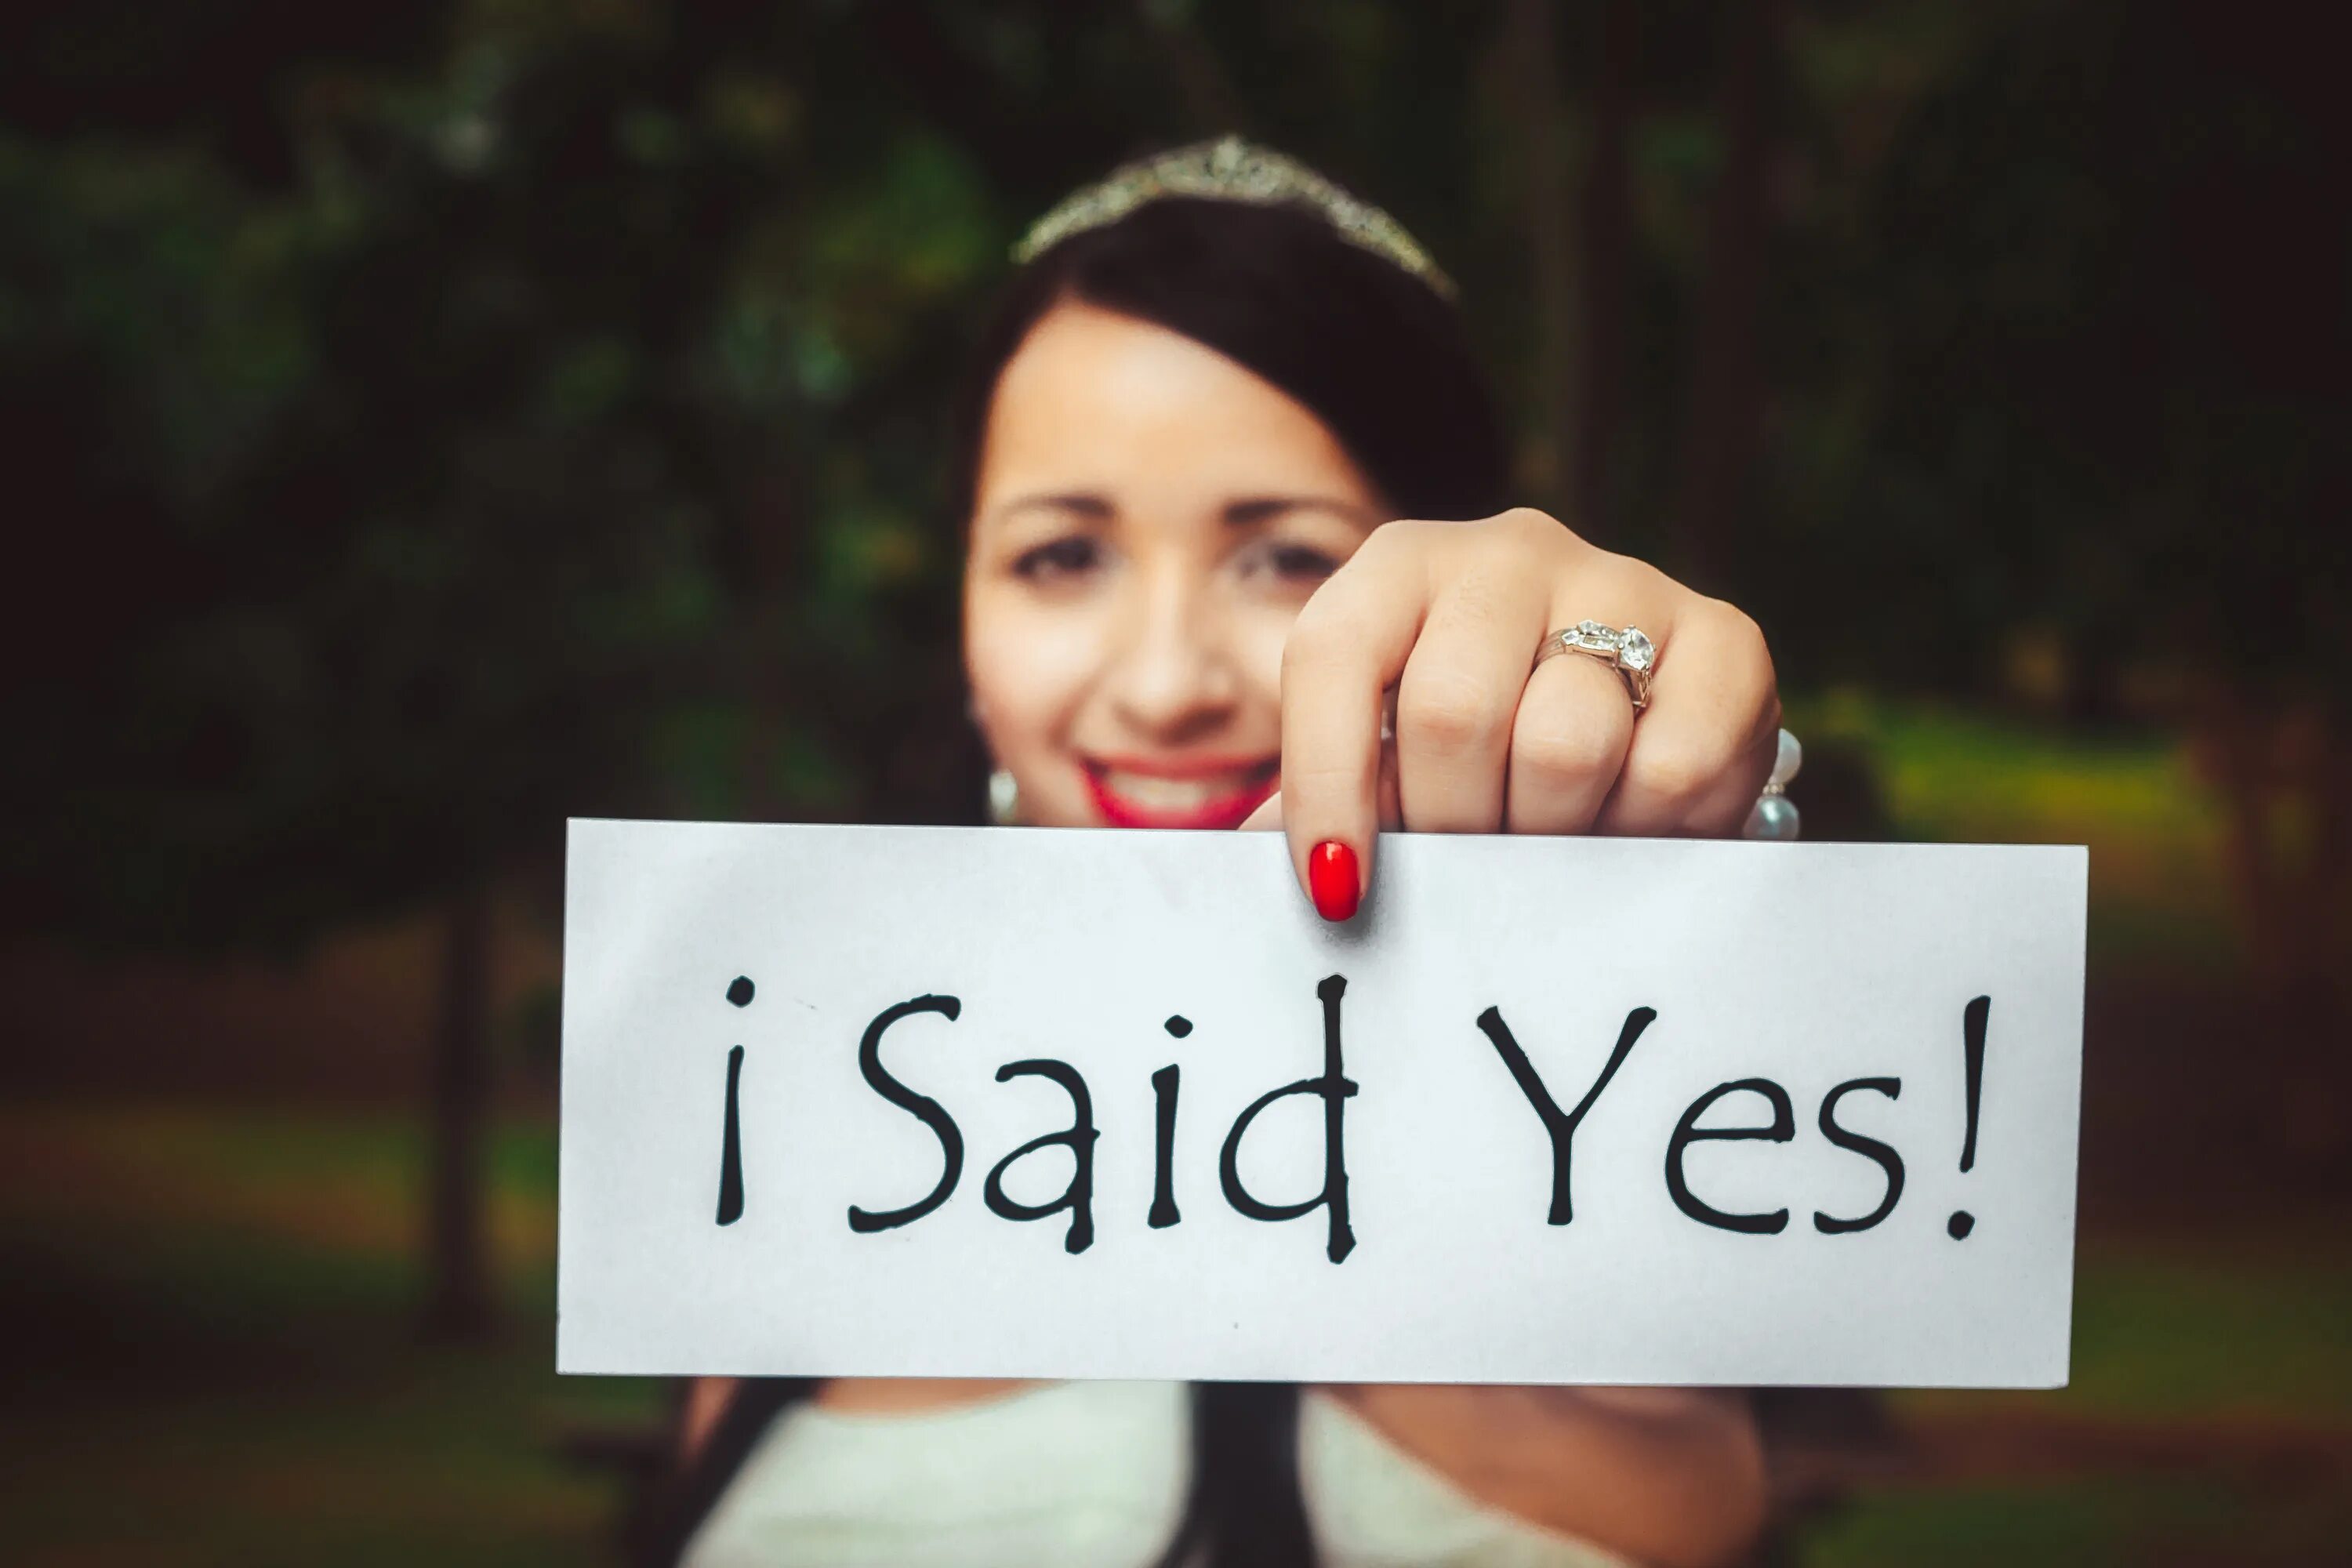 I have said yes. Said Yes. I said Yes. Картинка Yes. Логотип i said Yes.